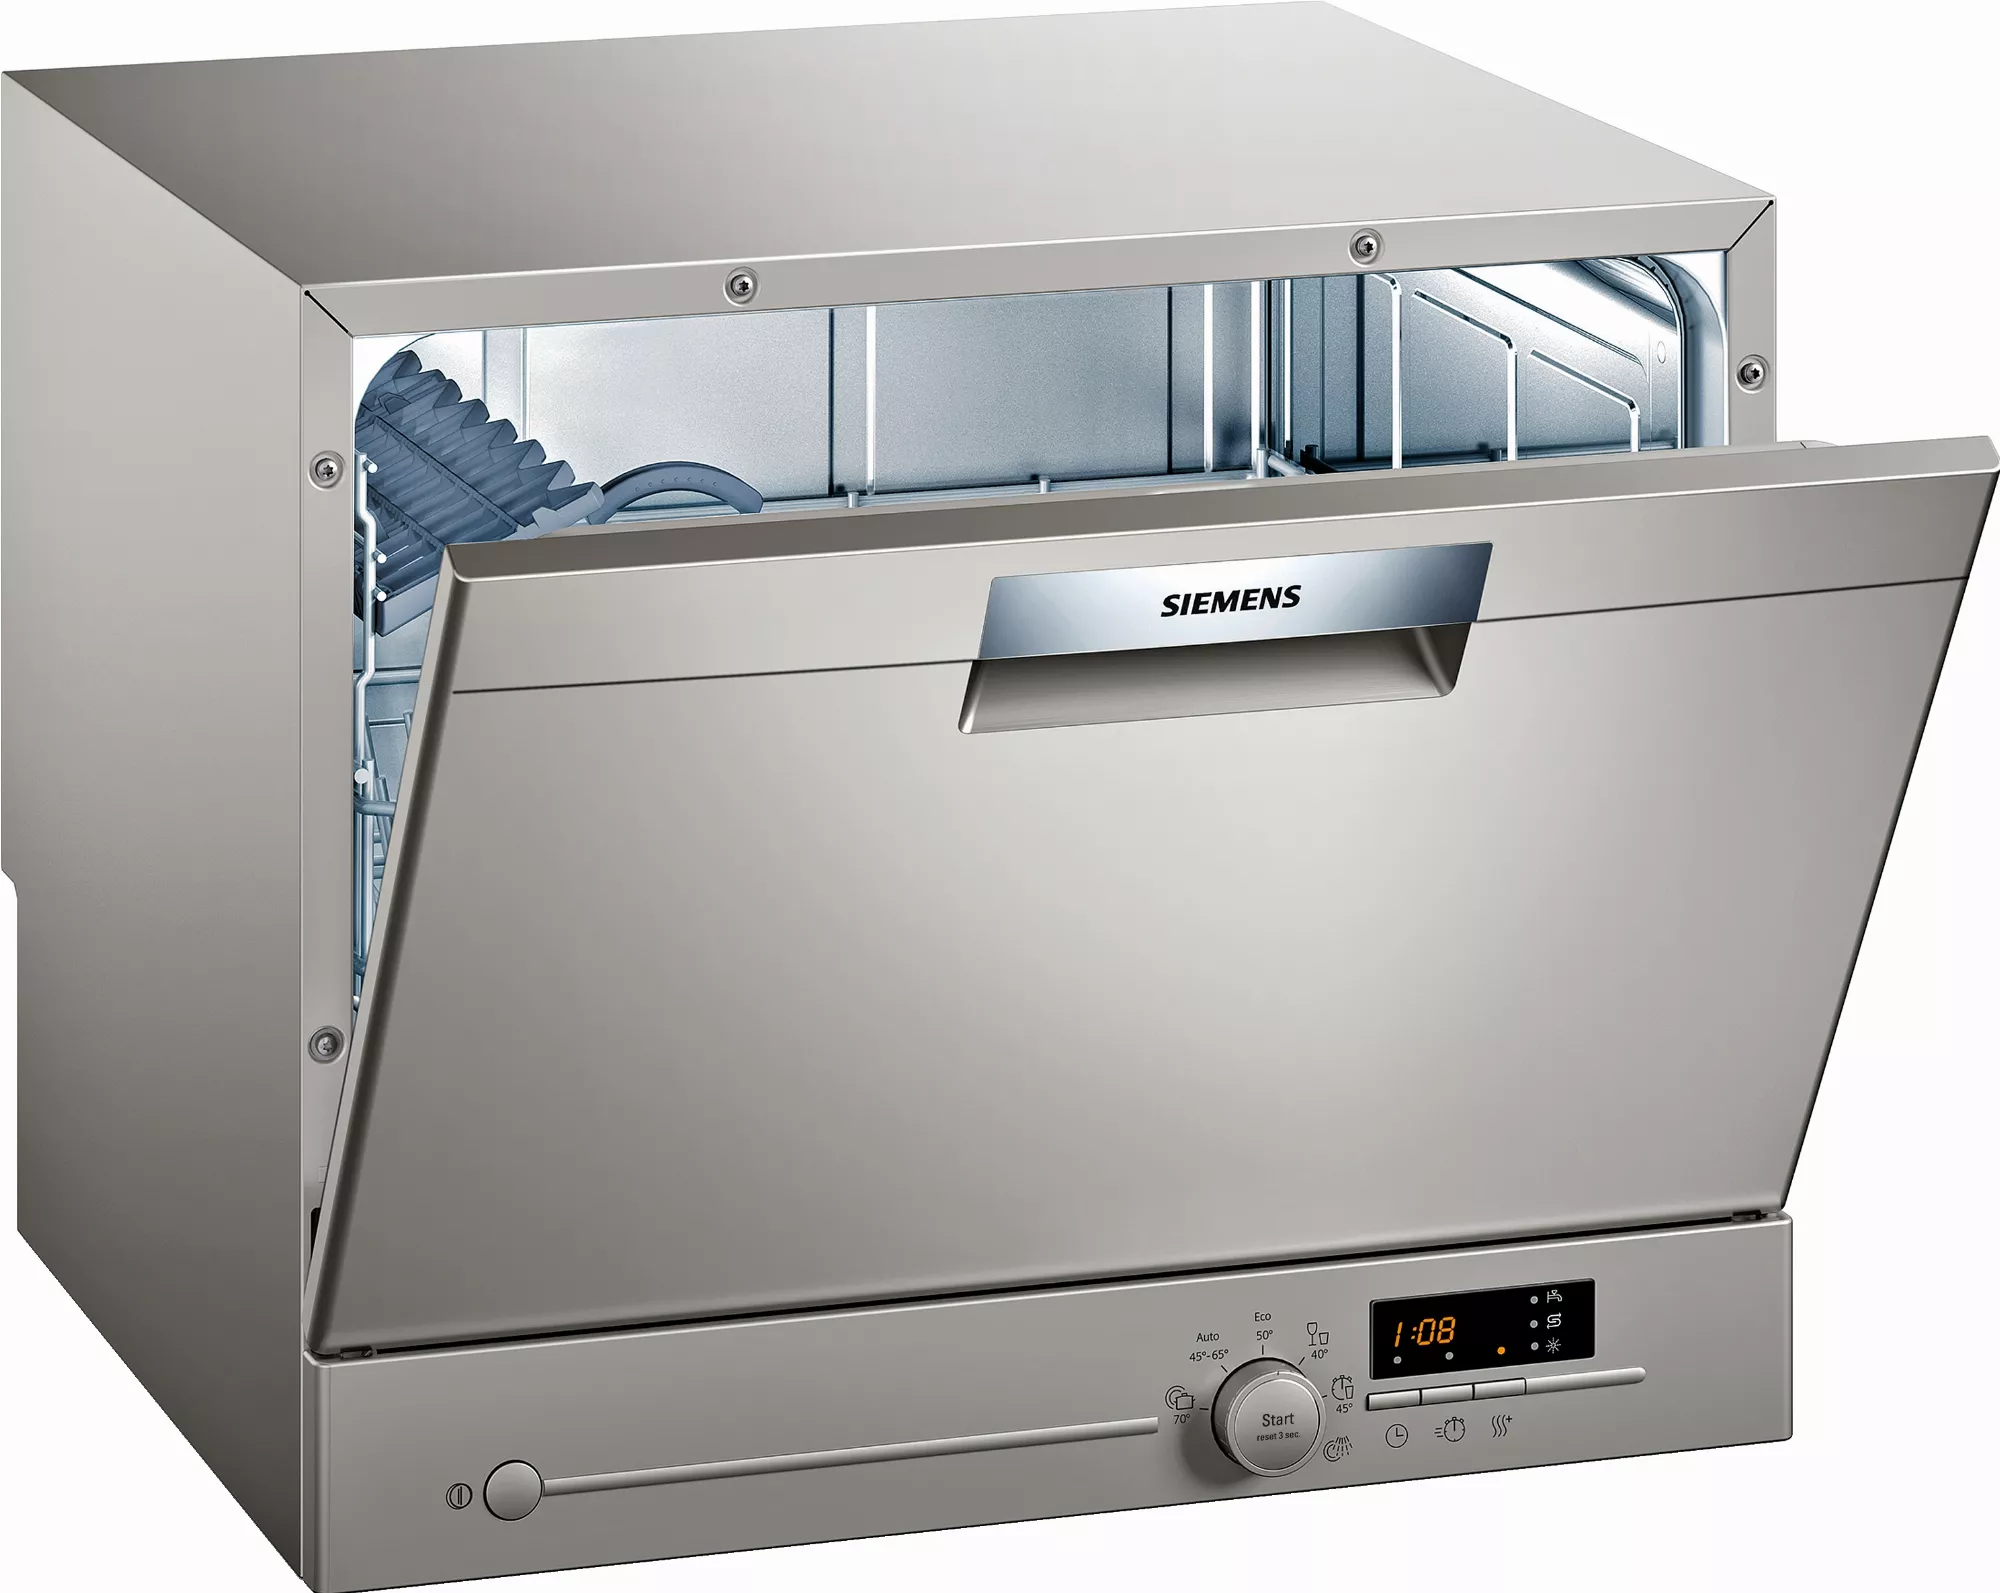 Siemens iQ300, Freistehender Kompakt-Geschirrspüler, 55 cm, Silver Inox, SK26E822EU